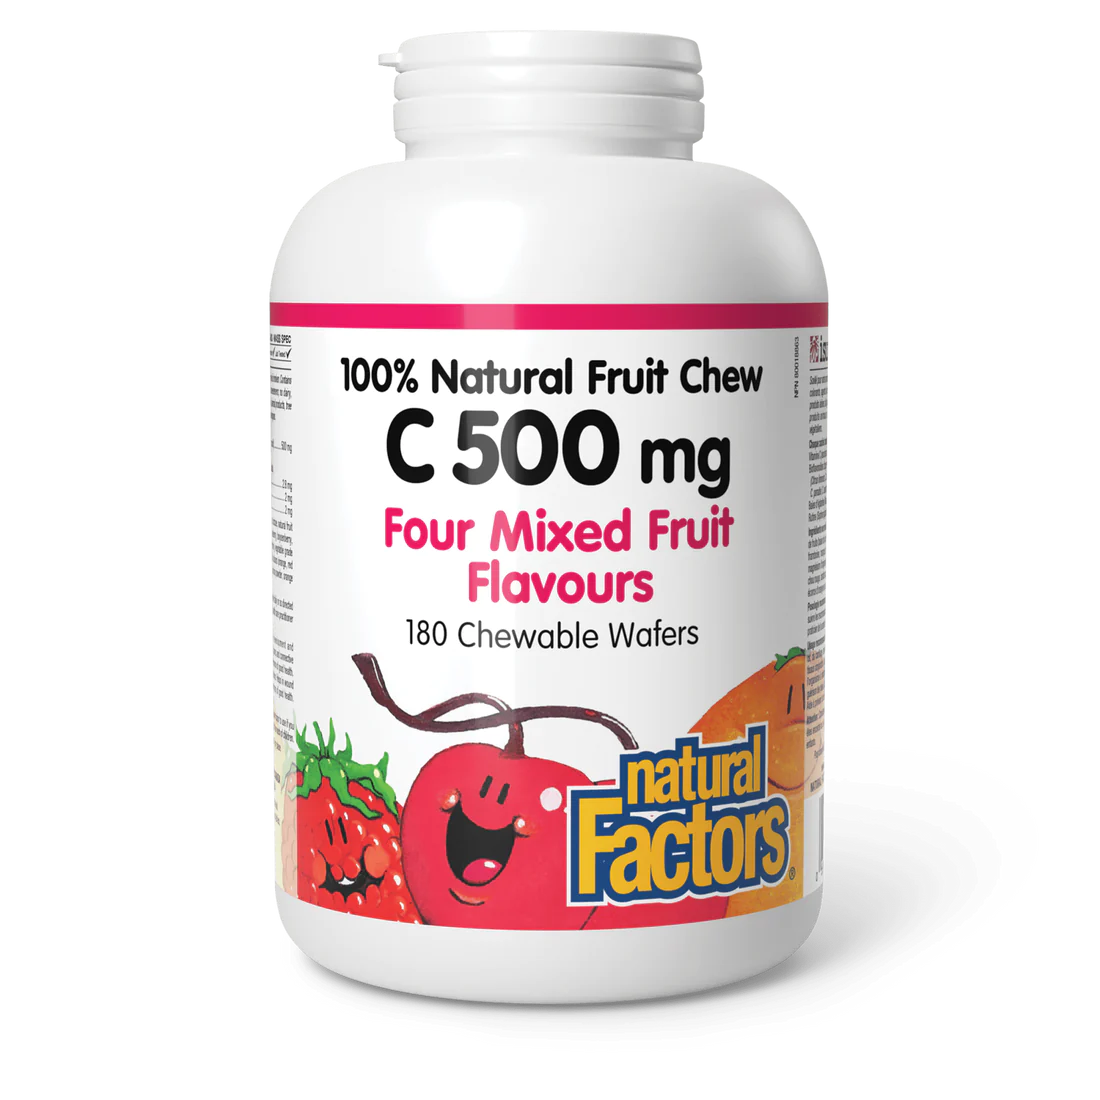 Natural Factors Chewable Vitamin C 500mg